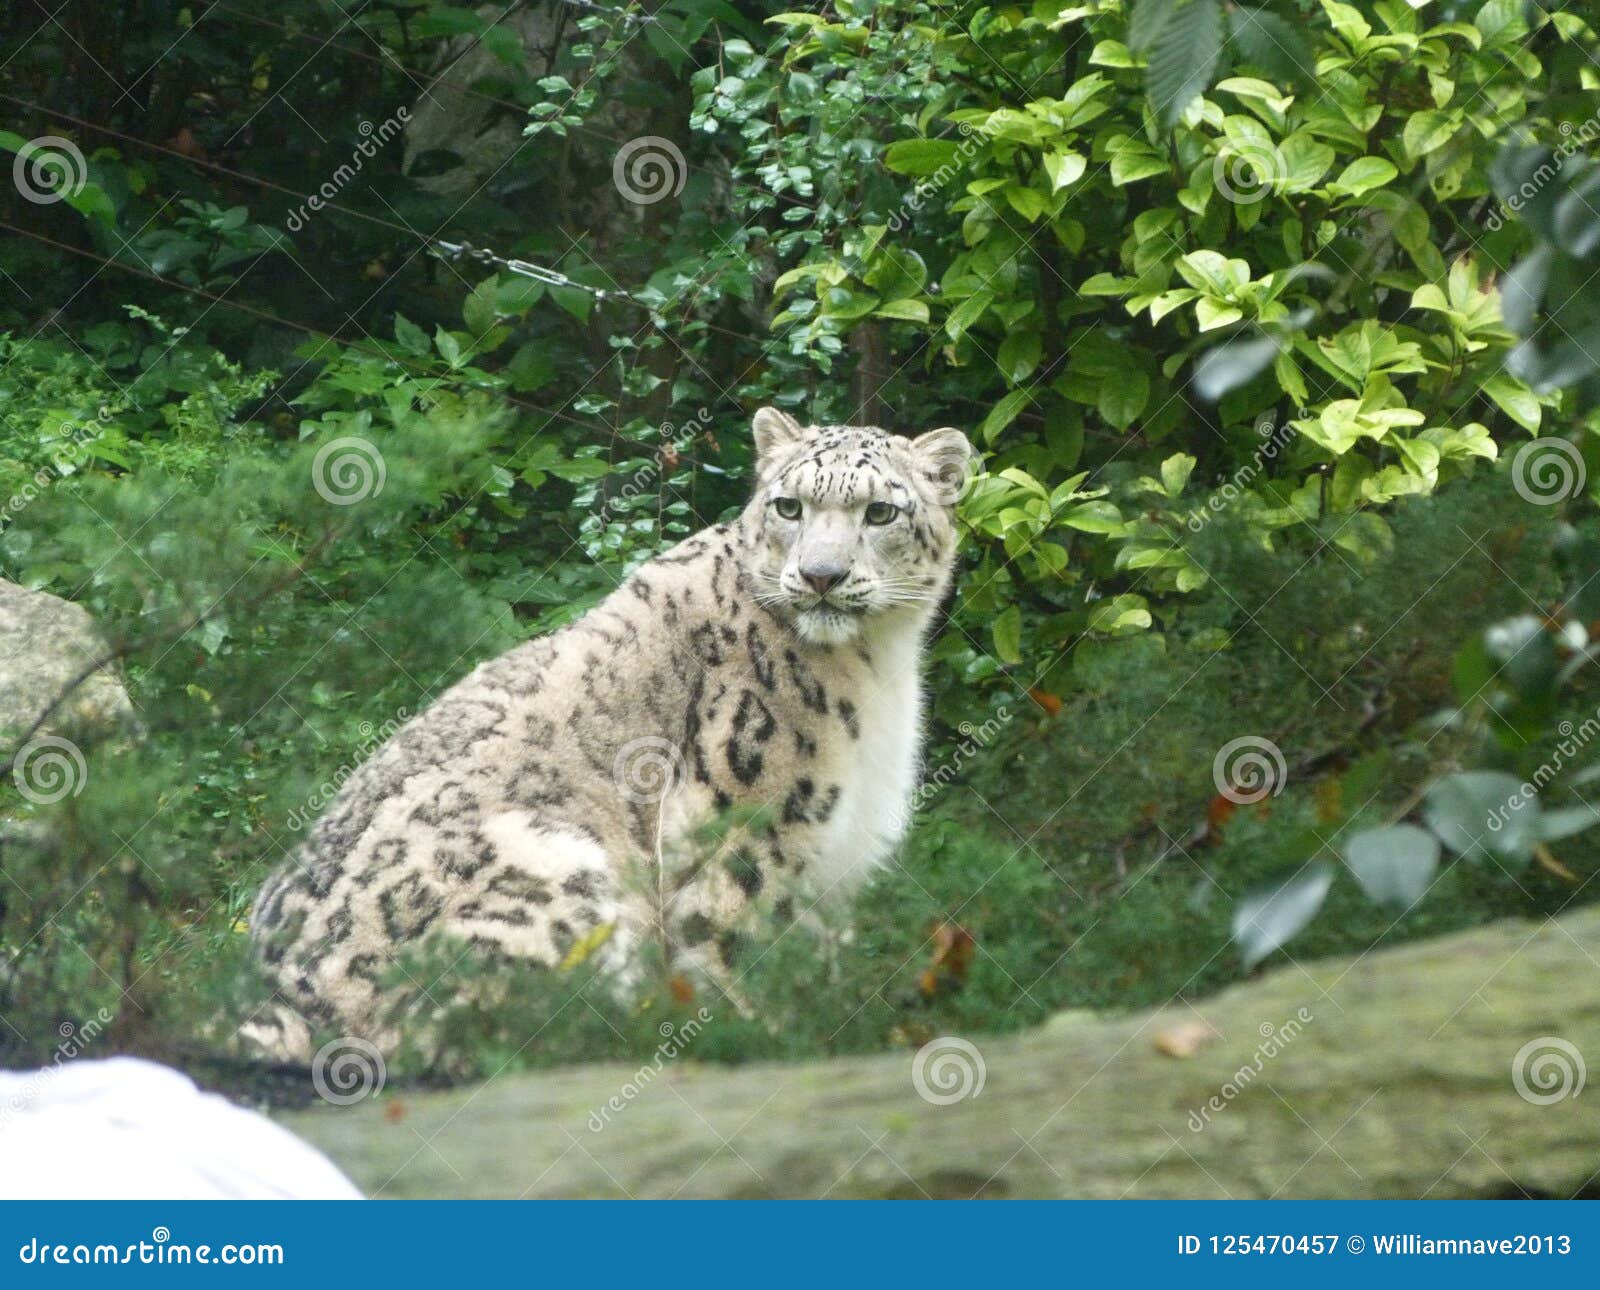 snow leopard parco natura viva italy